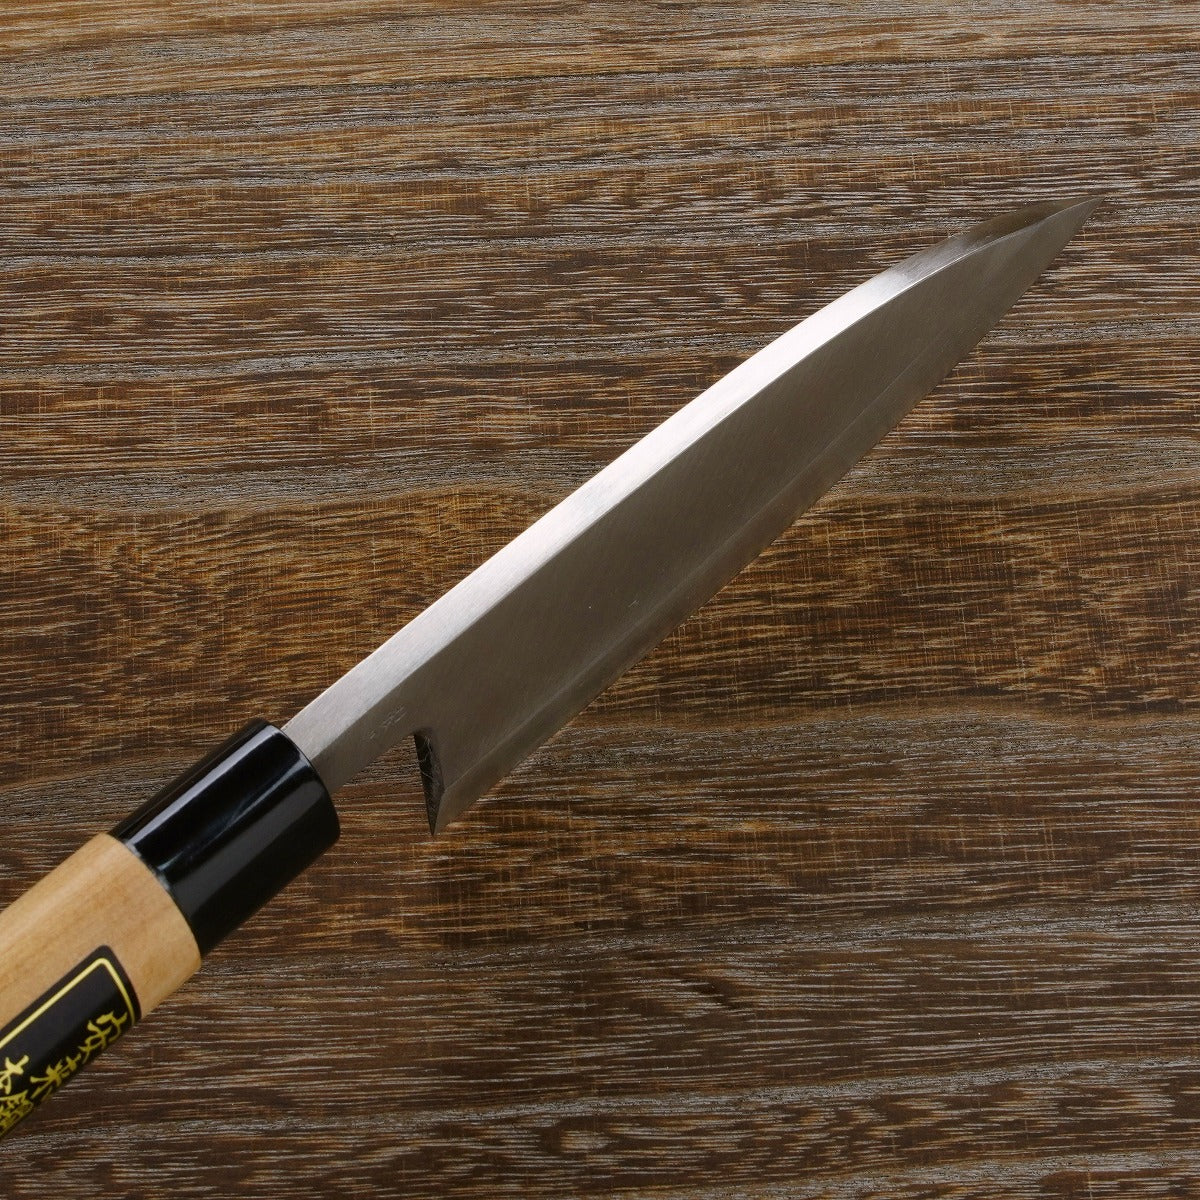 Deba (Butcher Knife) Ginsan Stainless Steel, 135mm~180mm